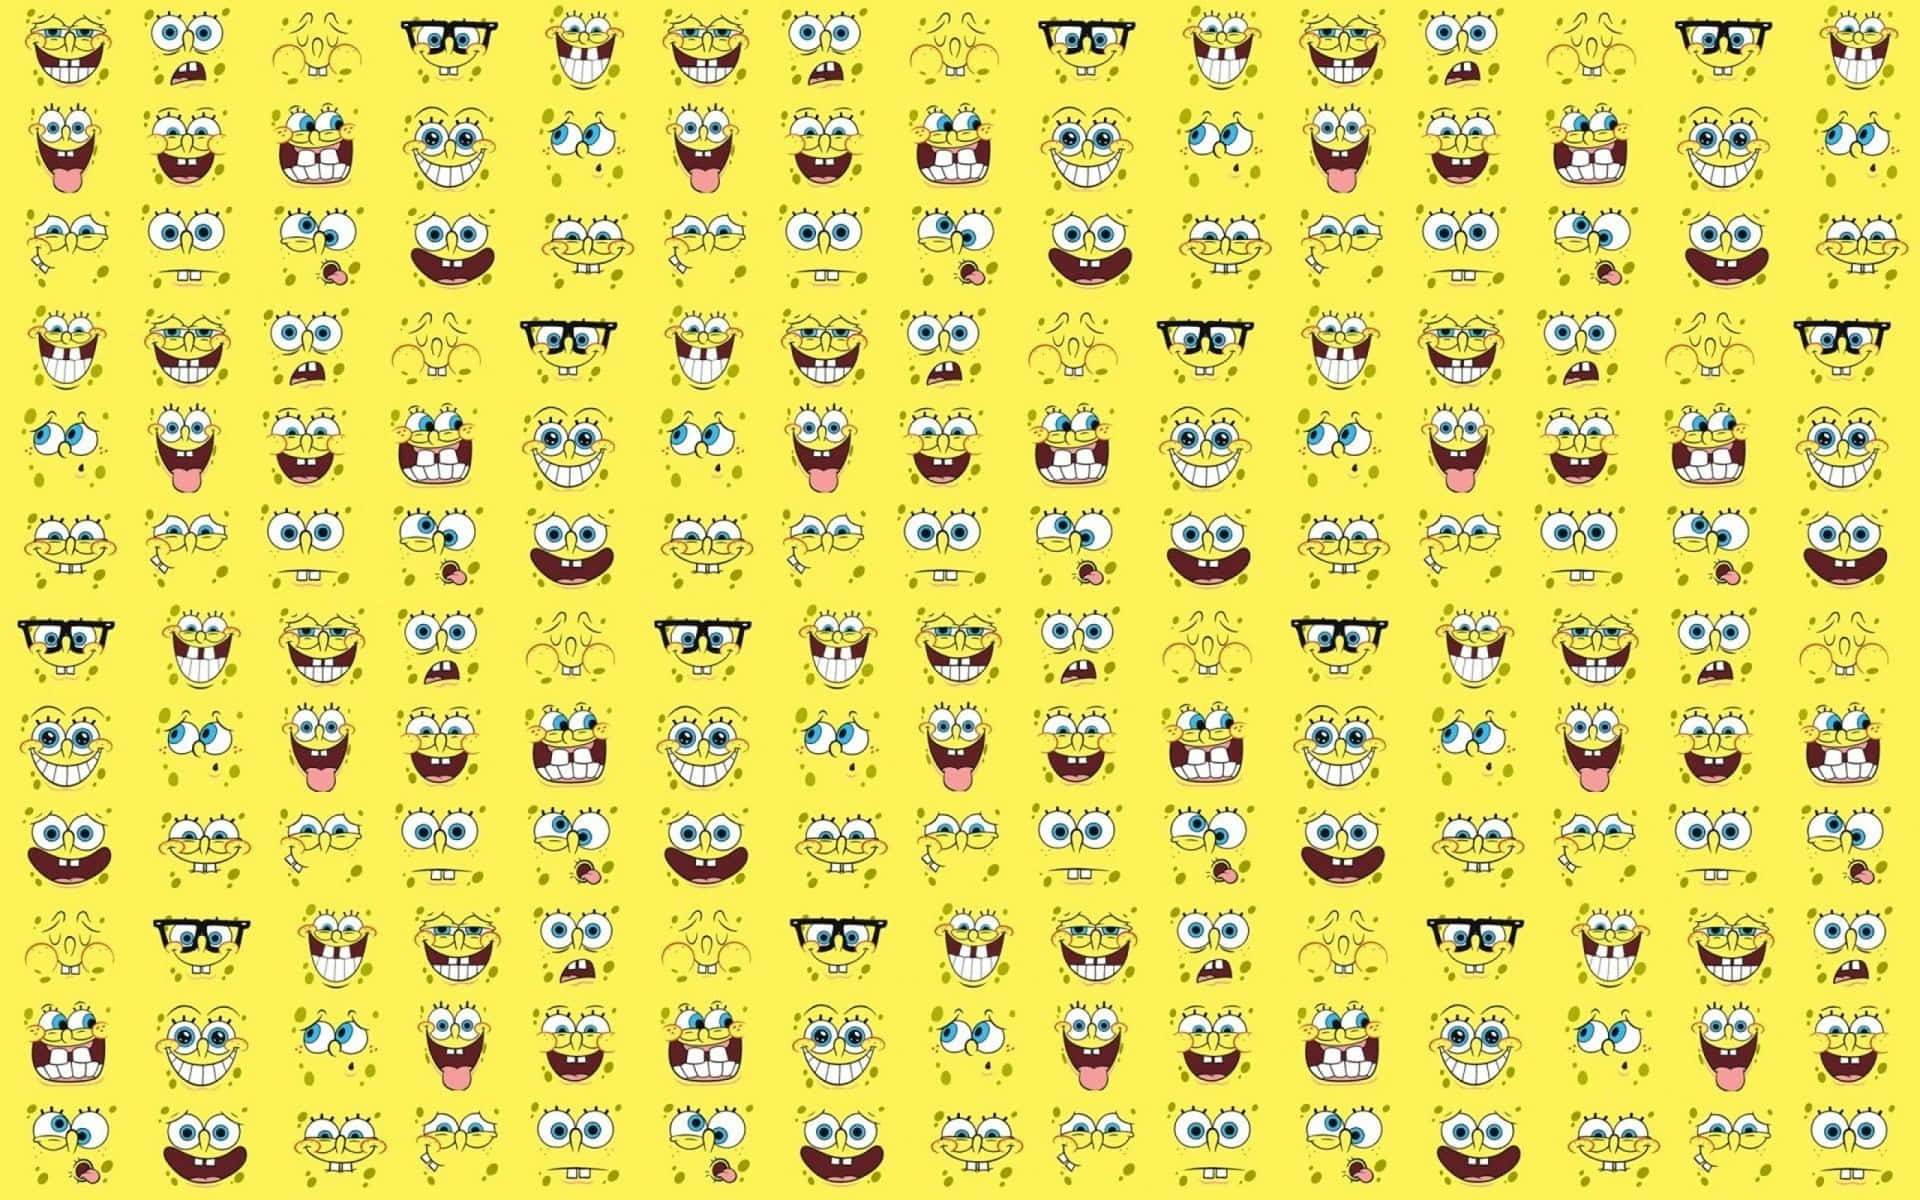 Spongebob Squarepants Wallpaper With Many Faces On It Wallpaper